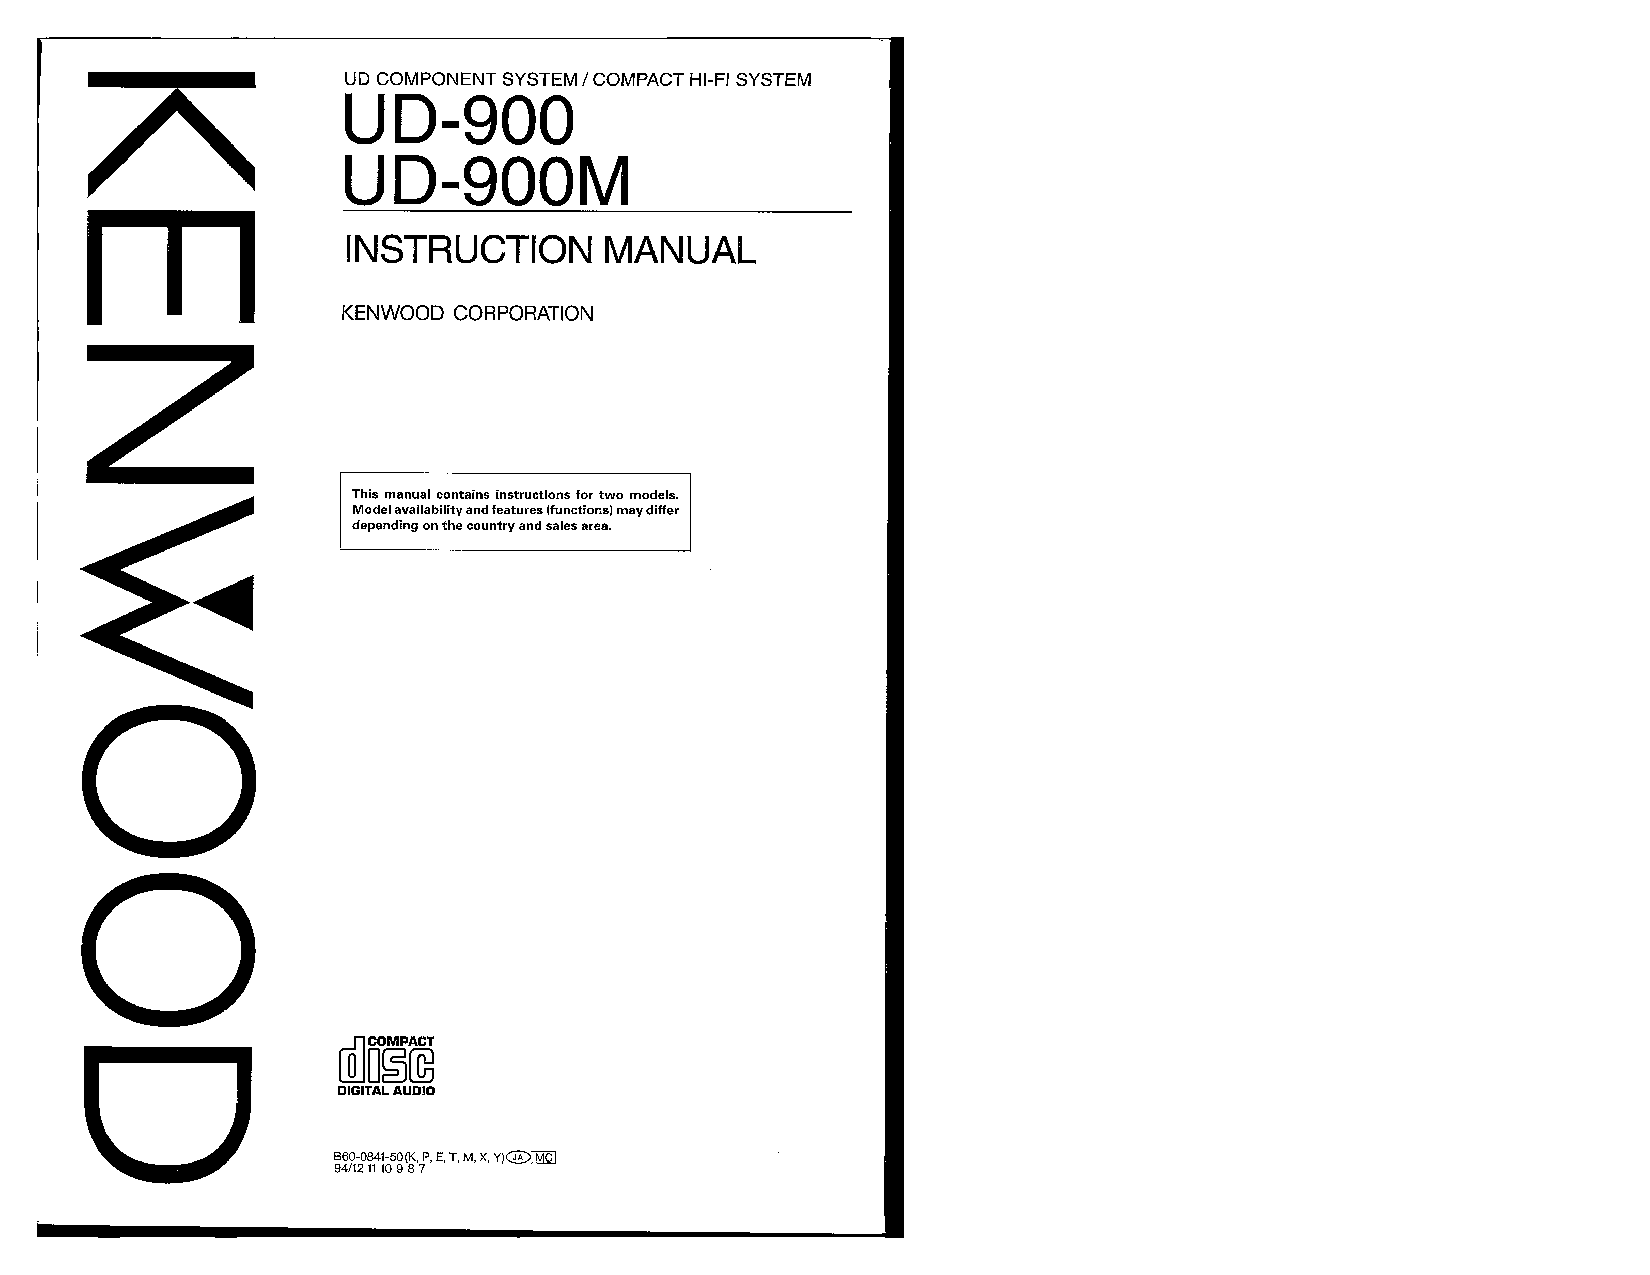 Kenwood UD-900 User Manual